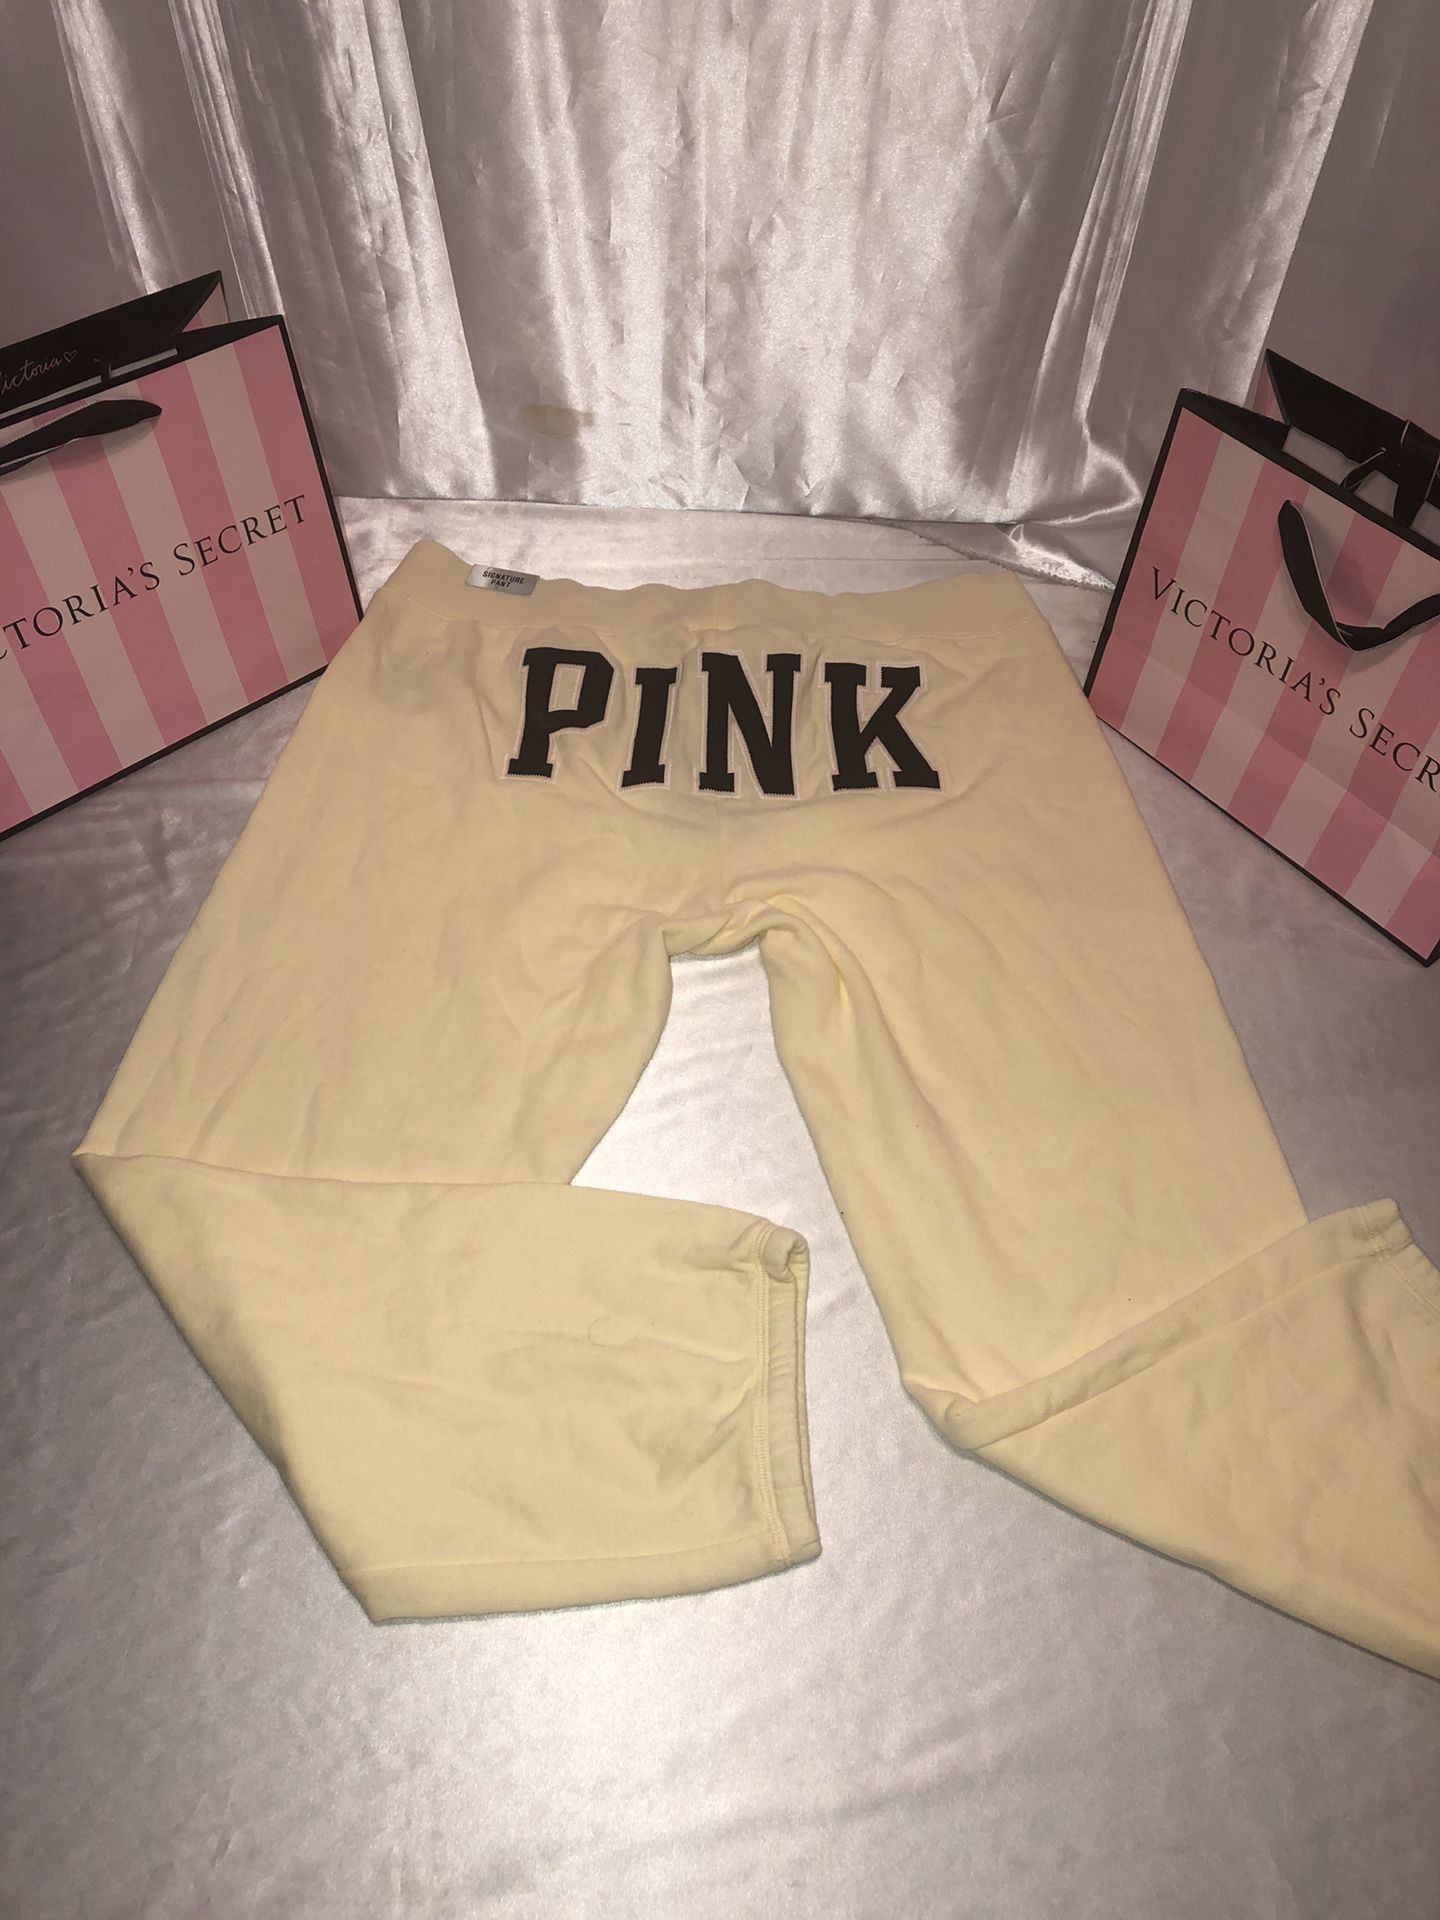 Victoria’s Secret Pink Limited Edition signature pants joggers sweatpants nwt large